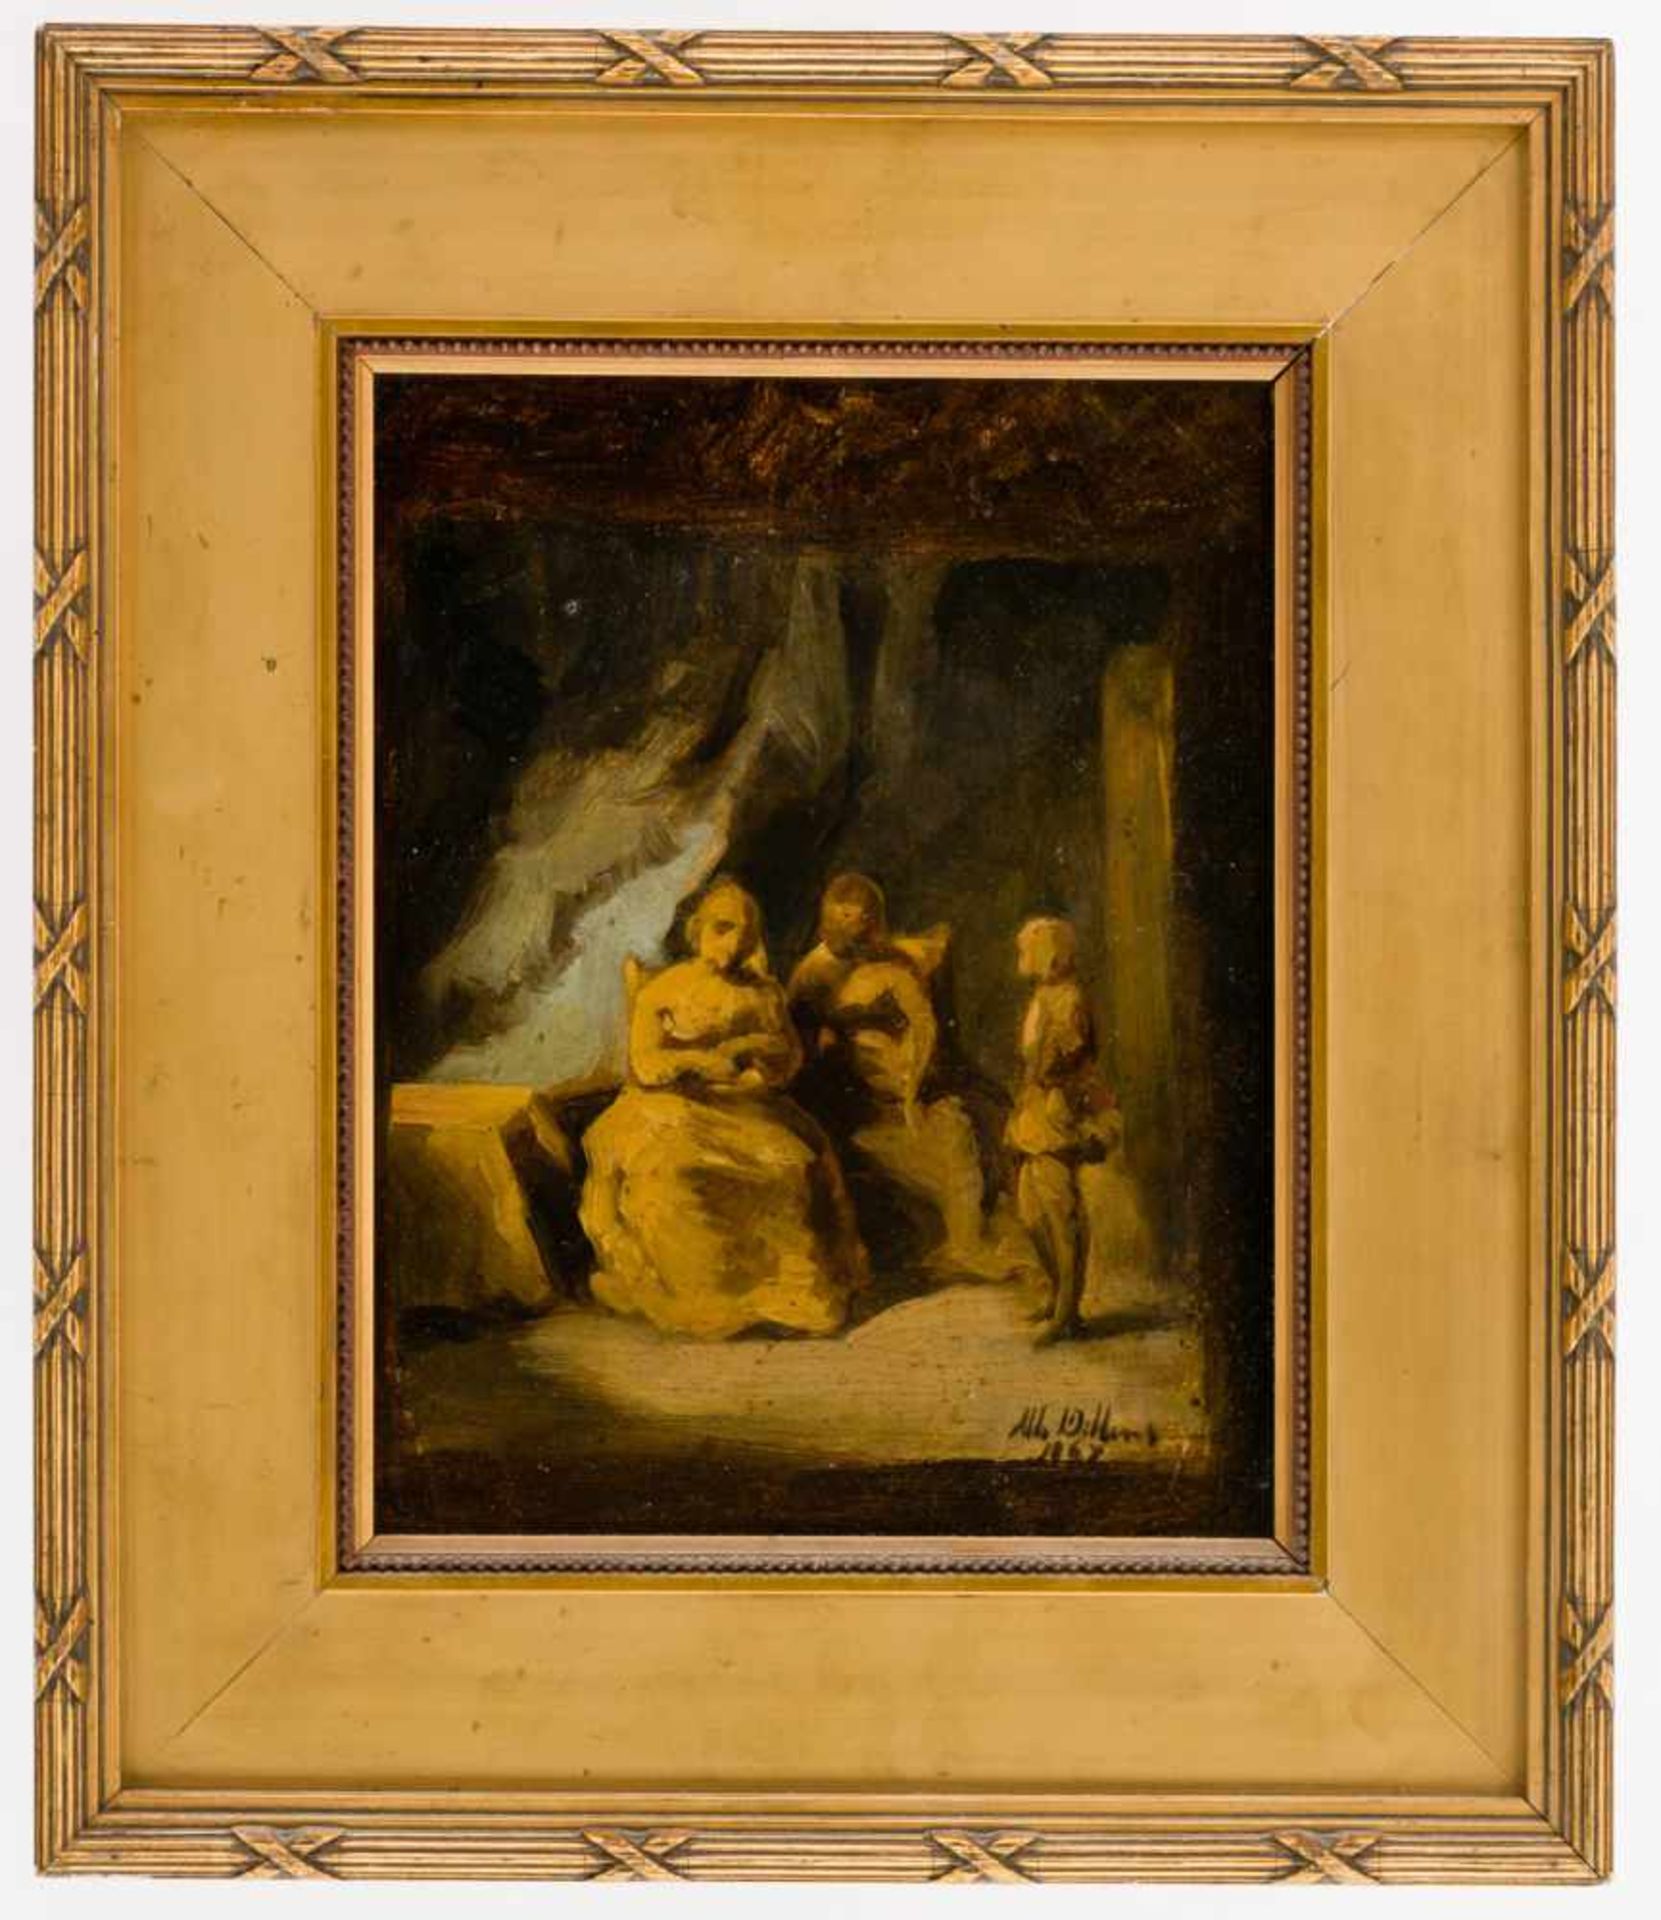 Albert Dillens (1844-1892) Genreszene Öl / Holz, datiert 1867 23,5 x 18,5 cm, Rahmen: 34 x 29 cm - Image 2 of 3